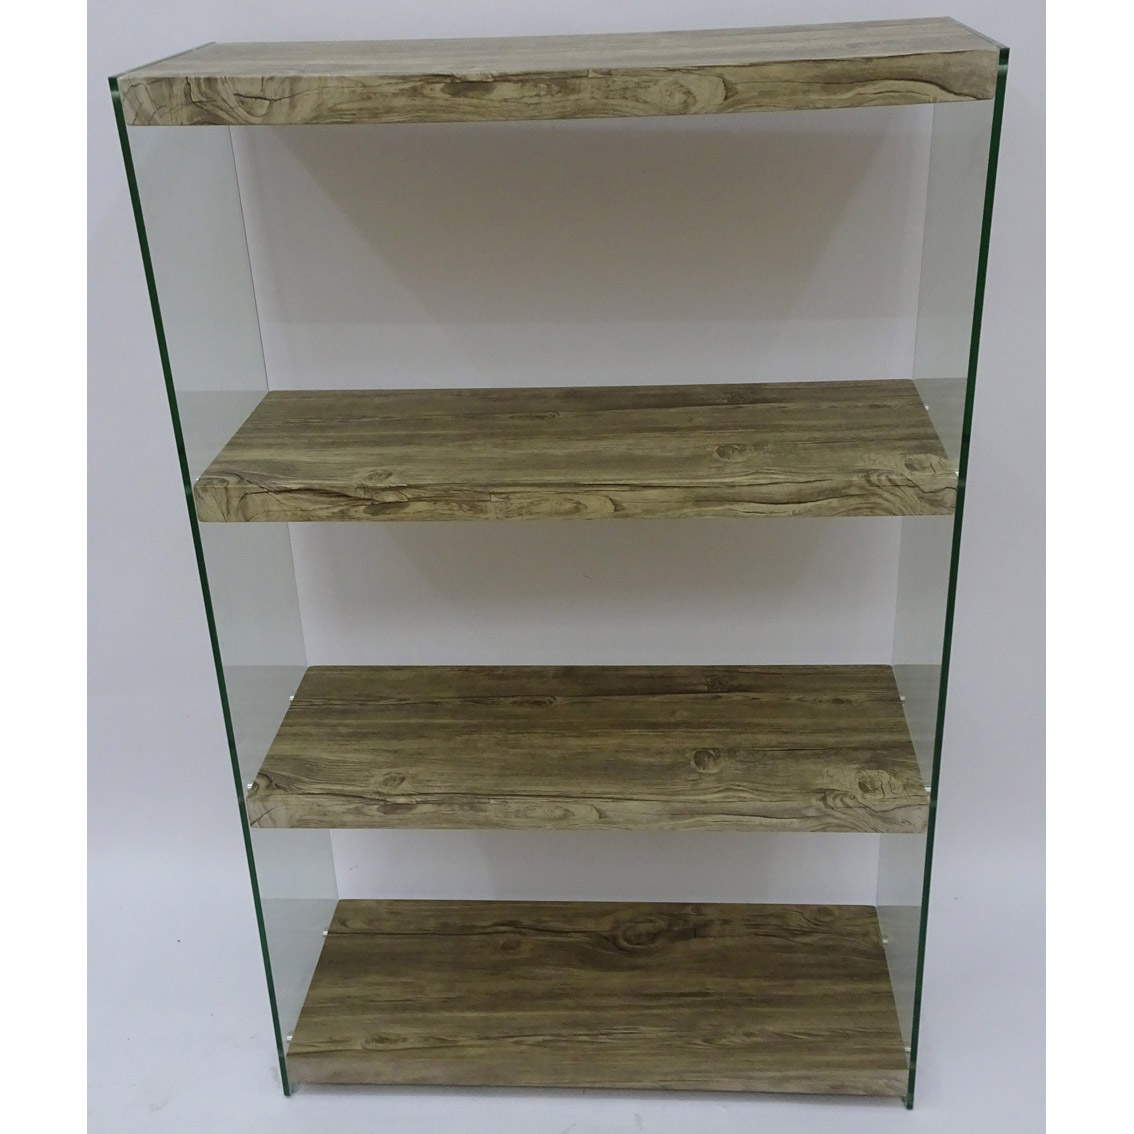 Contemporary glass book shelf with wood veneer tiers